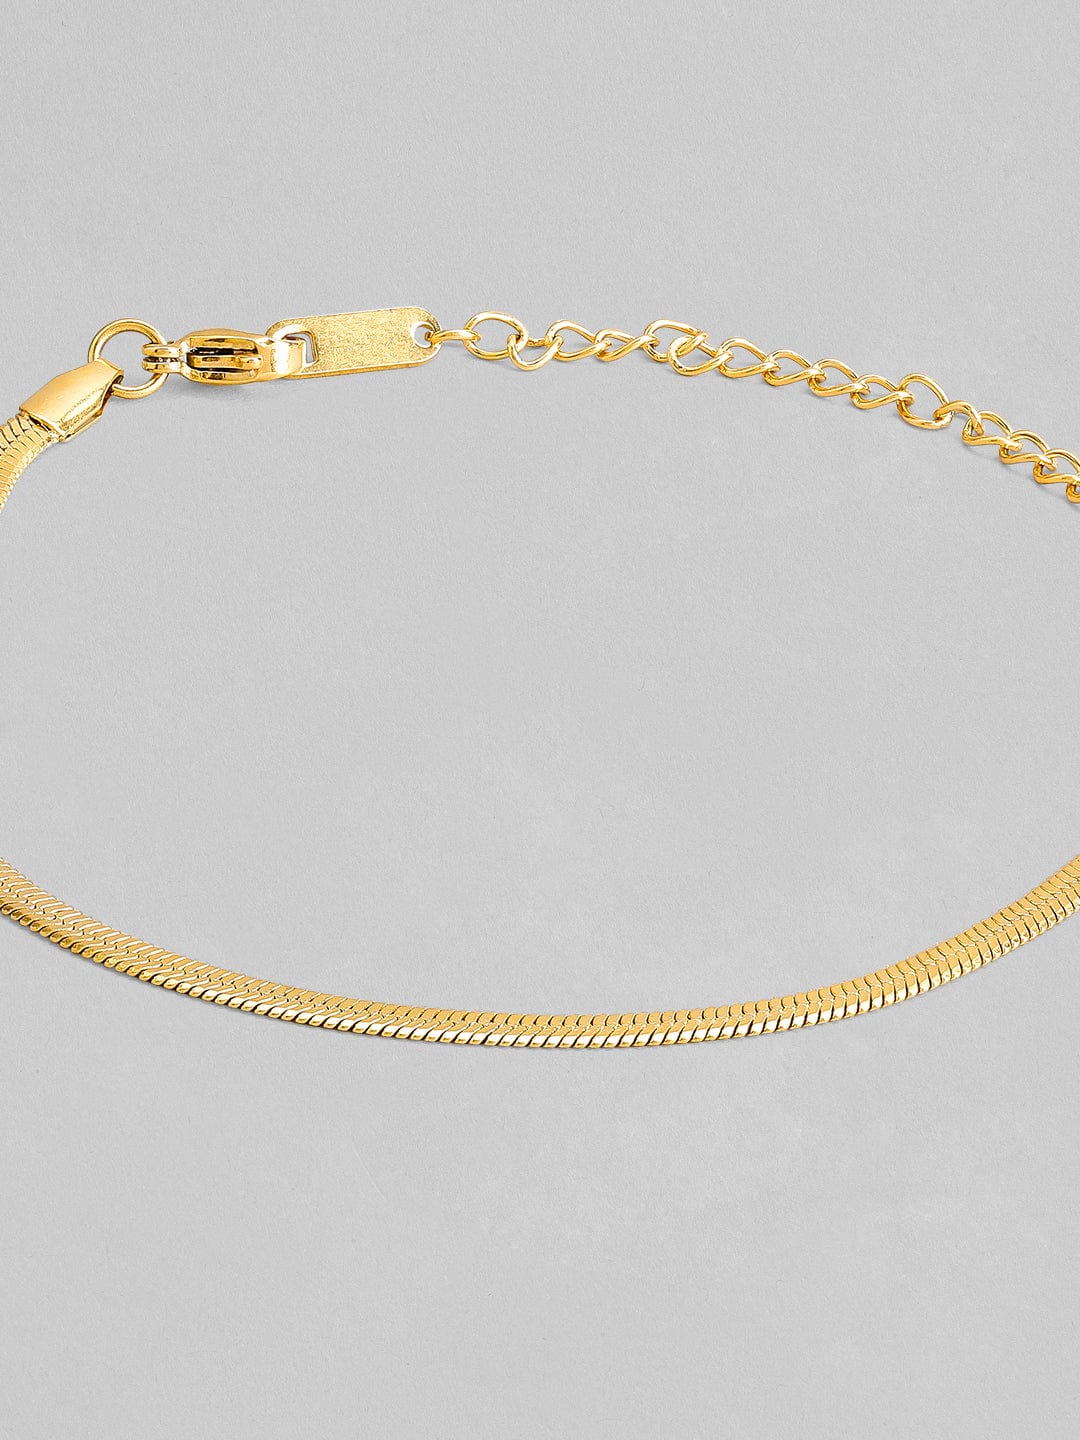 Rubans Voguish 18K Gold Plated Stainless Steel Waterproof Snake Chain Bracelet. Bangles & Bracelets